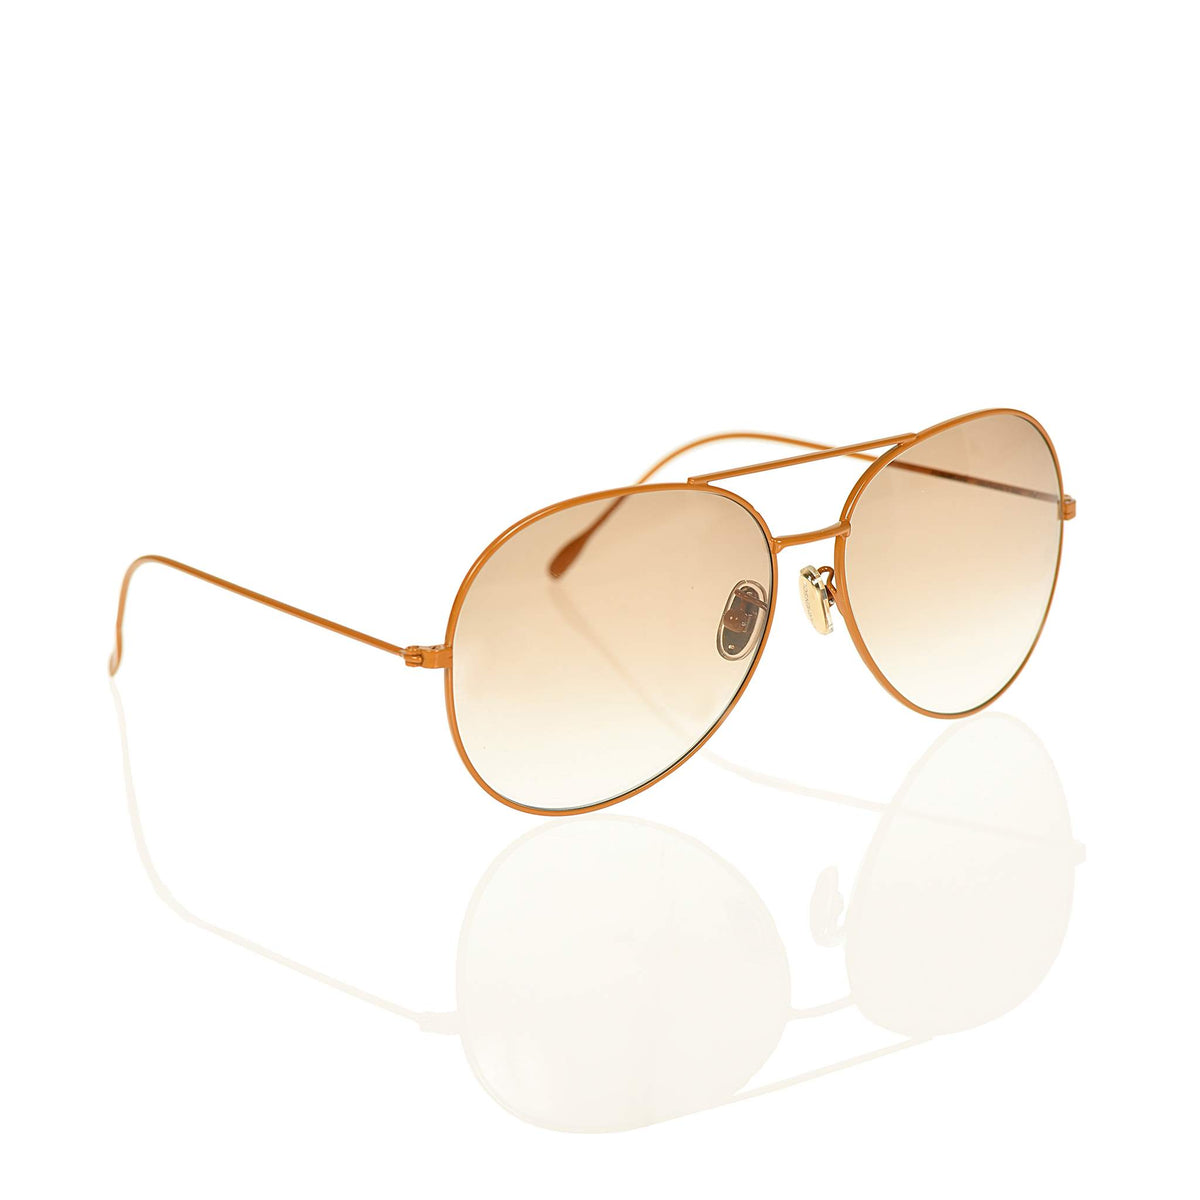 Nude aviator sunglasses for women, Aviator shades for beach lovers